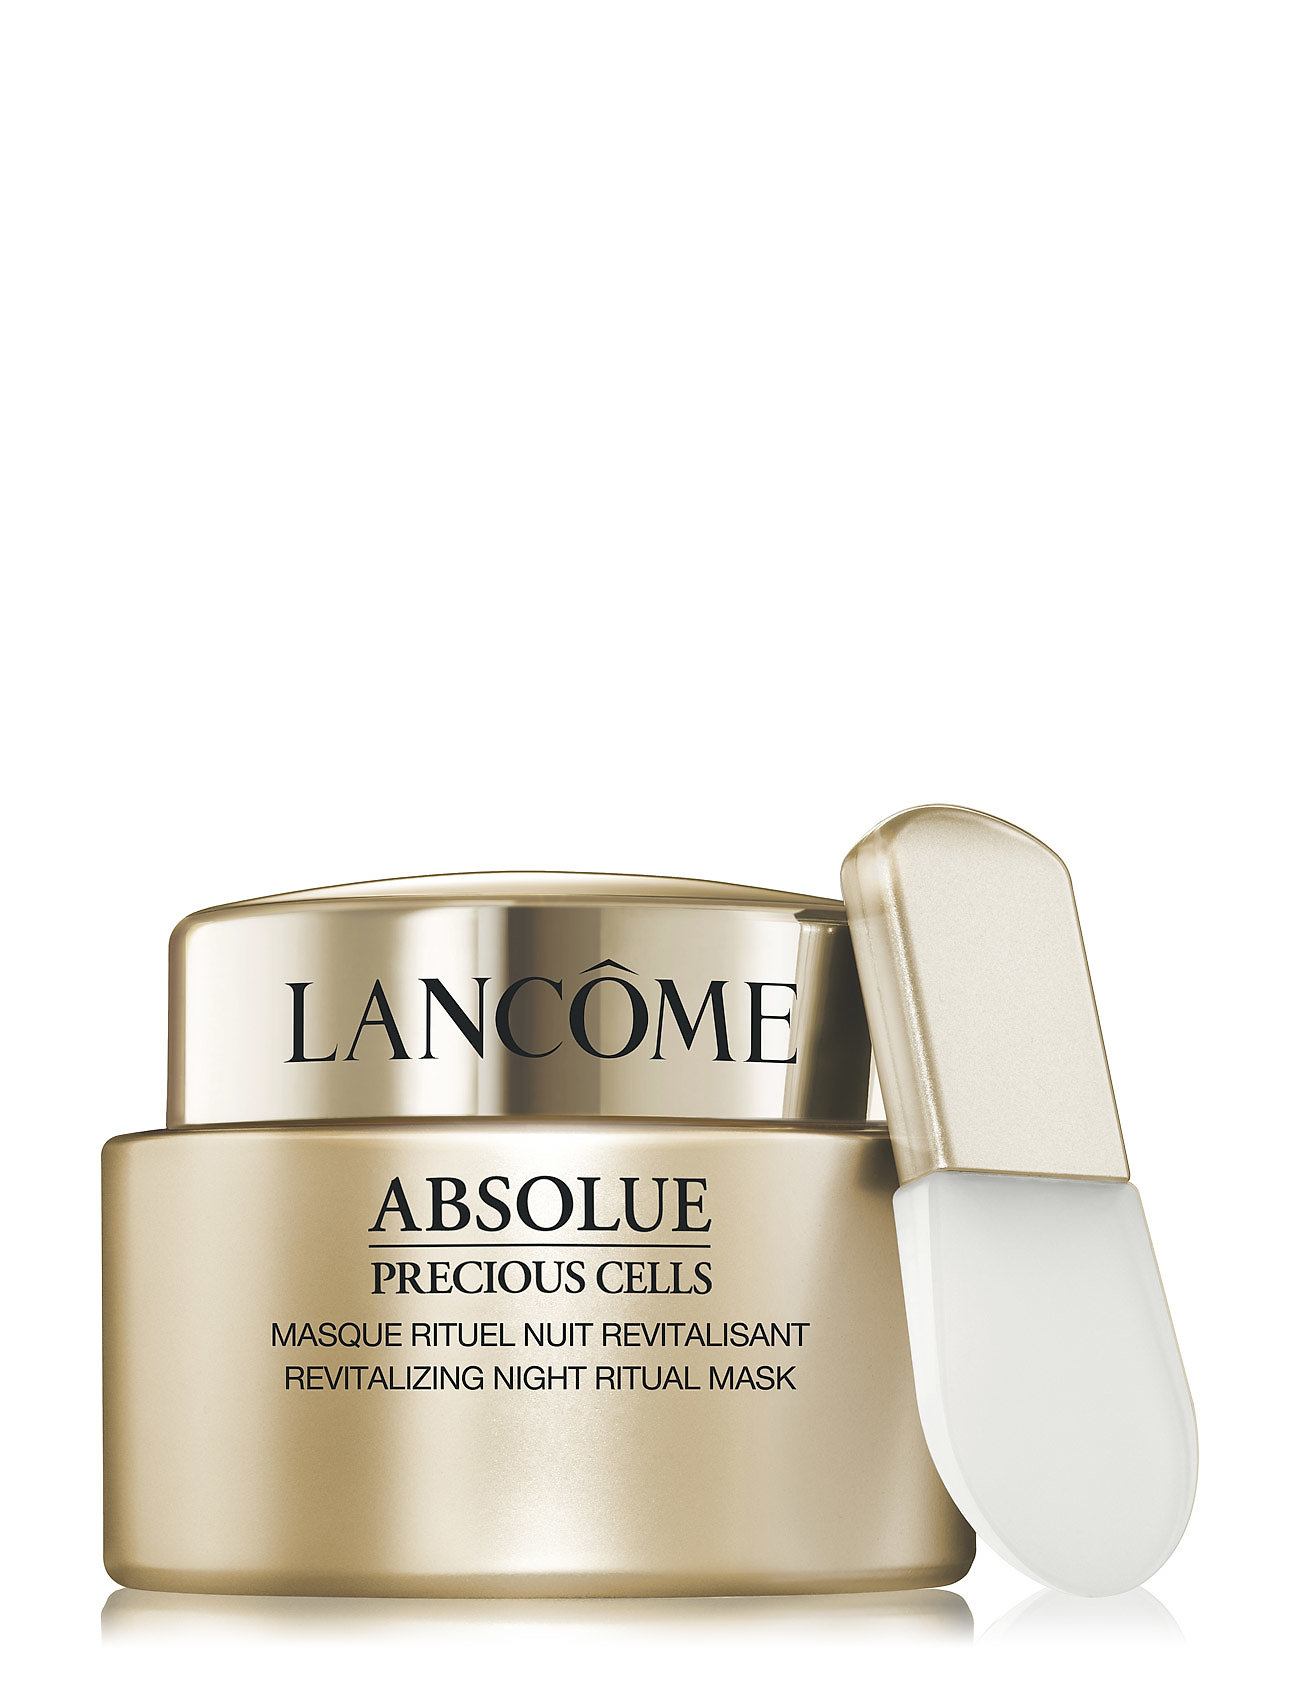 Absolue Precious Cells Mask Beauty Women Skin Care Face Moisturizers Night Cream Nude Lancôme